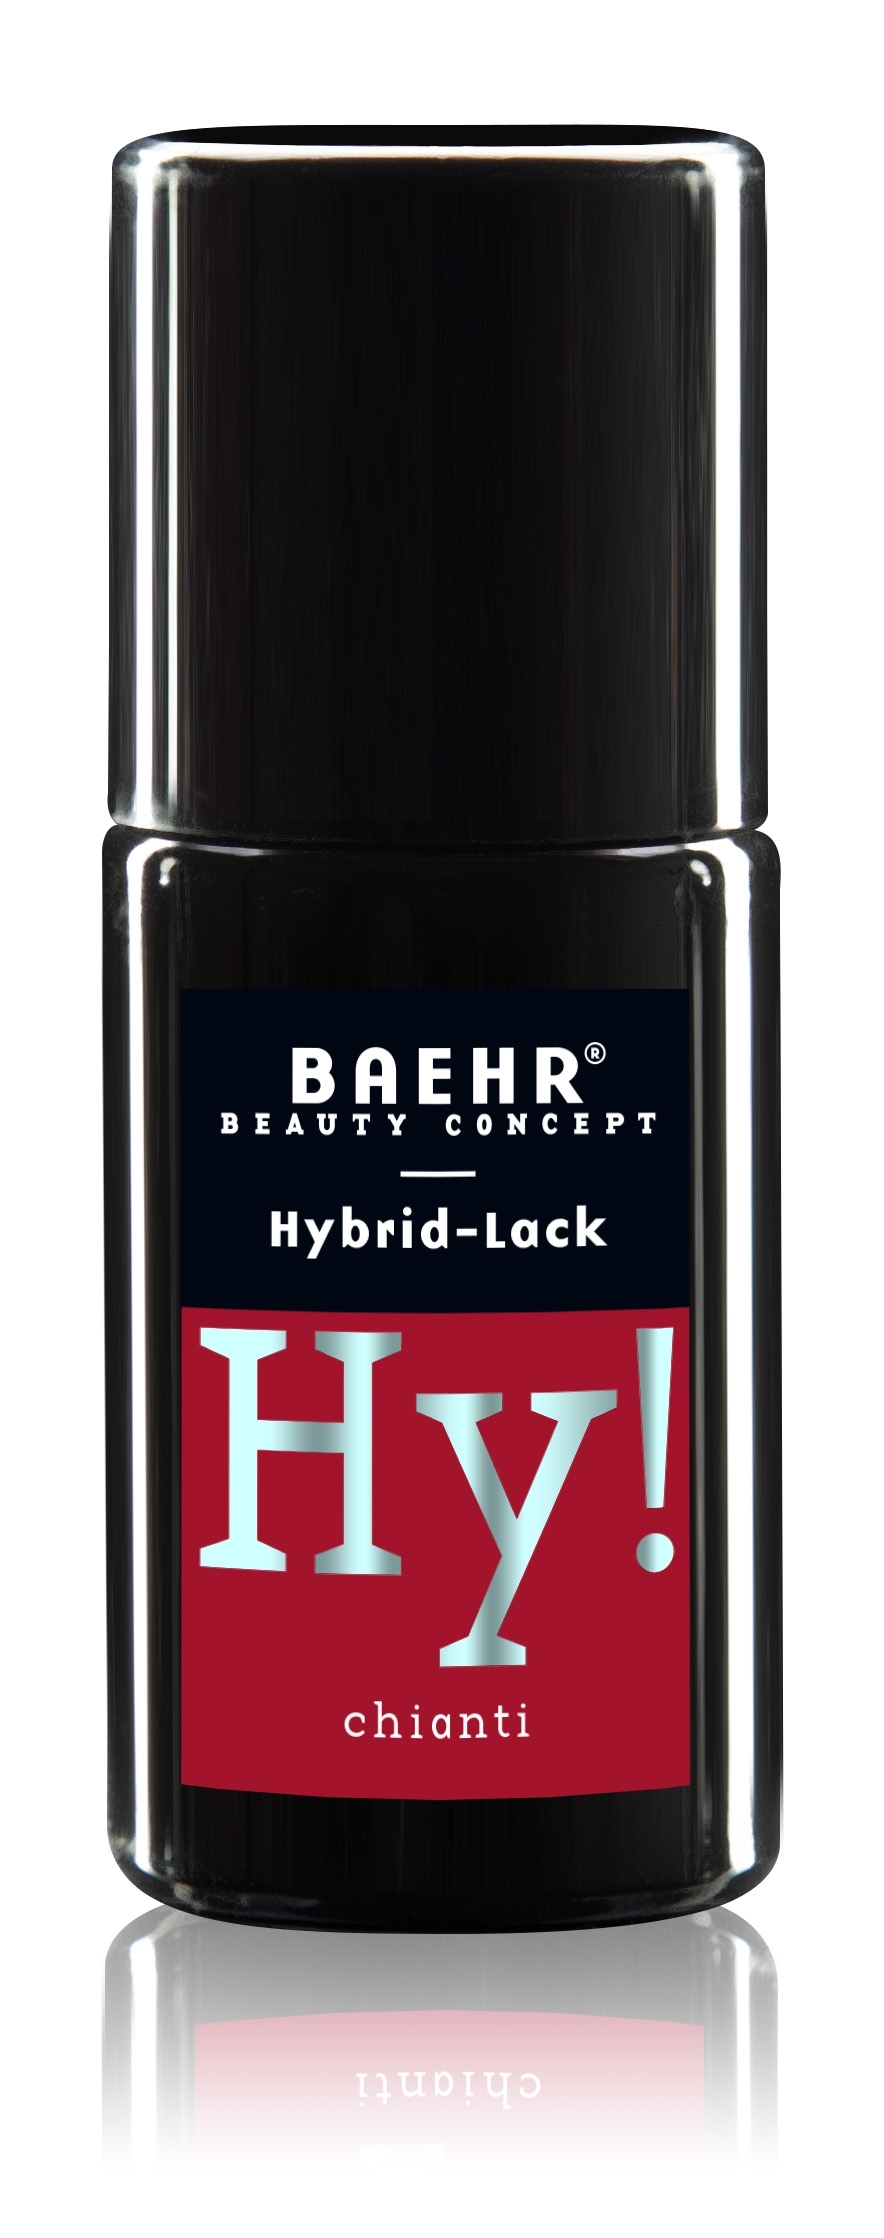 BAEHR BEAUTY CONCEPT - NAILS Hy! Hybrid-Lack, chianti 8 ml